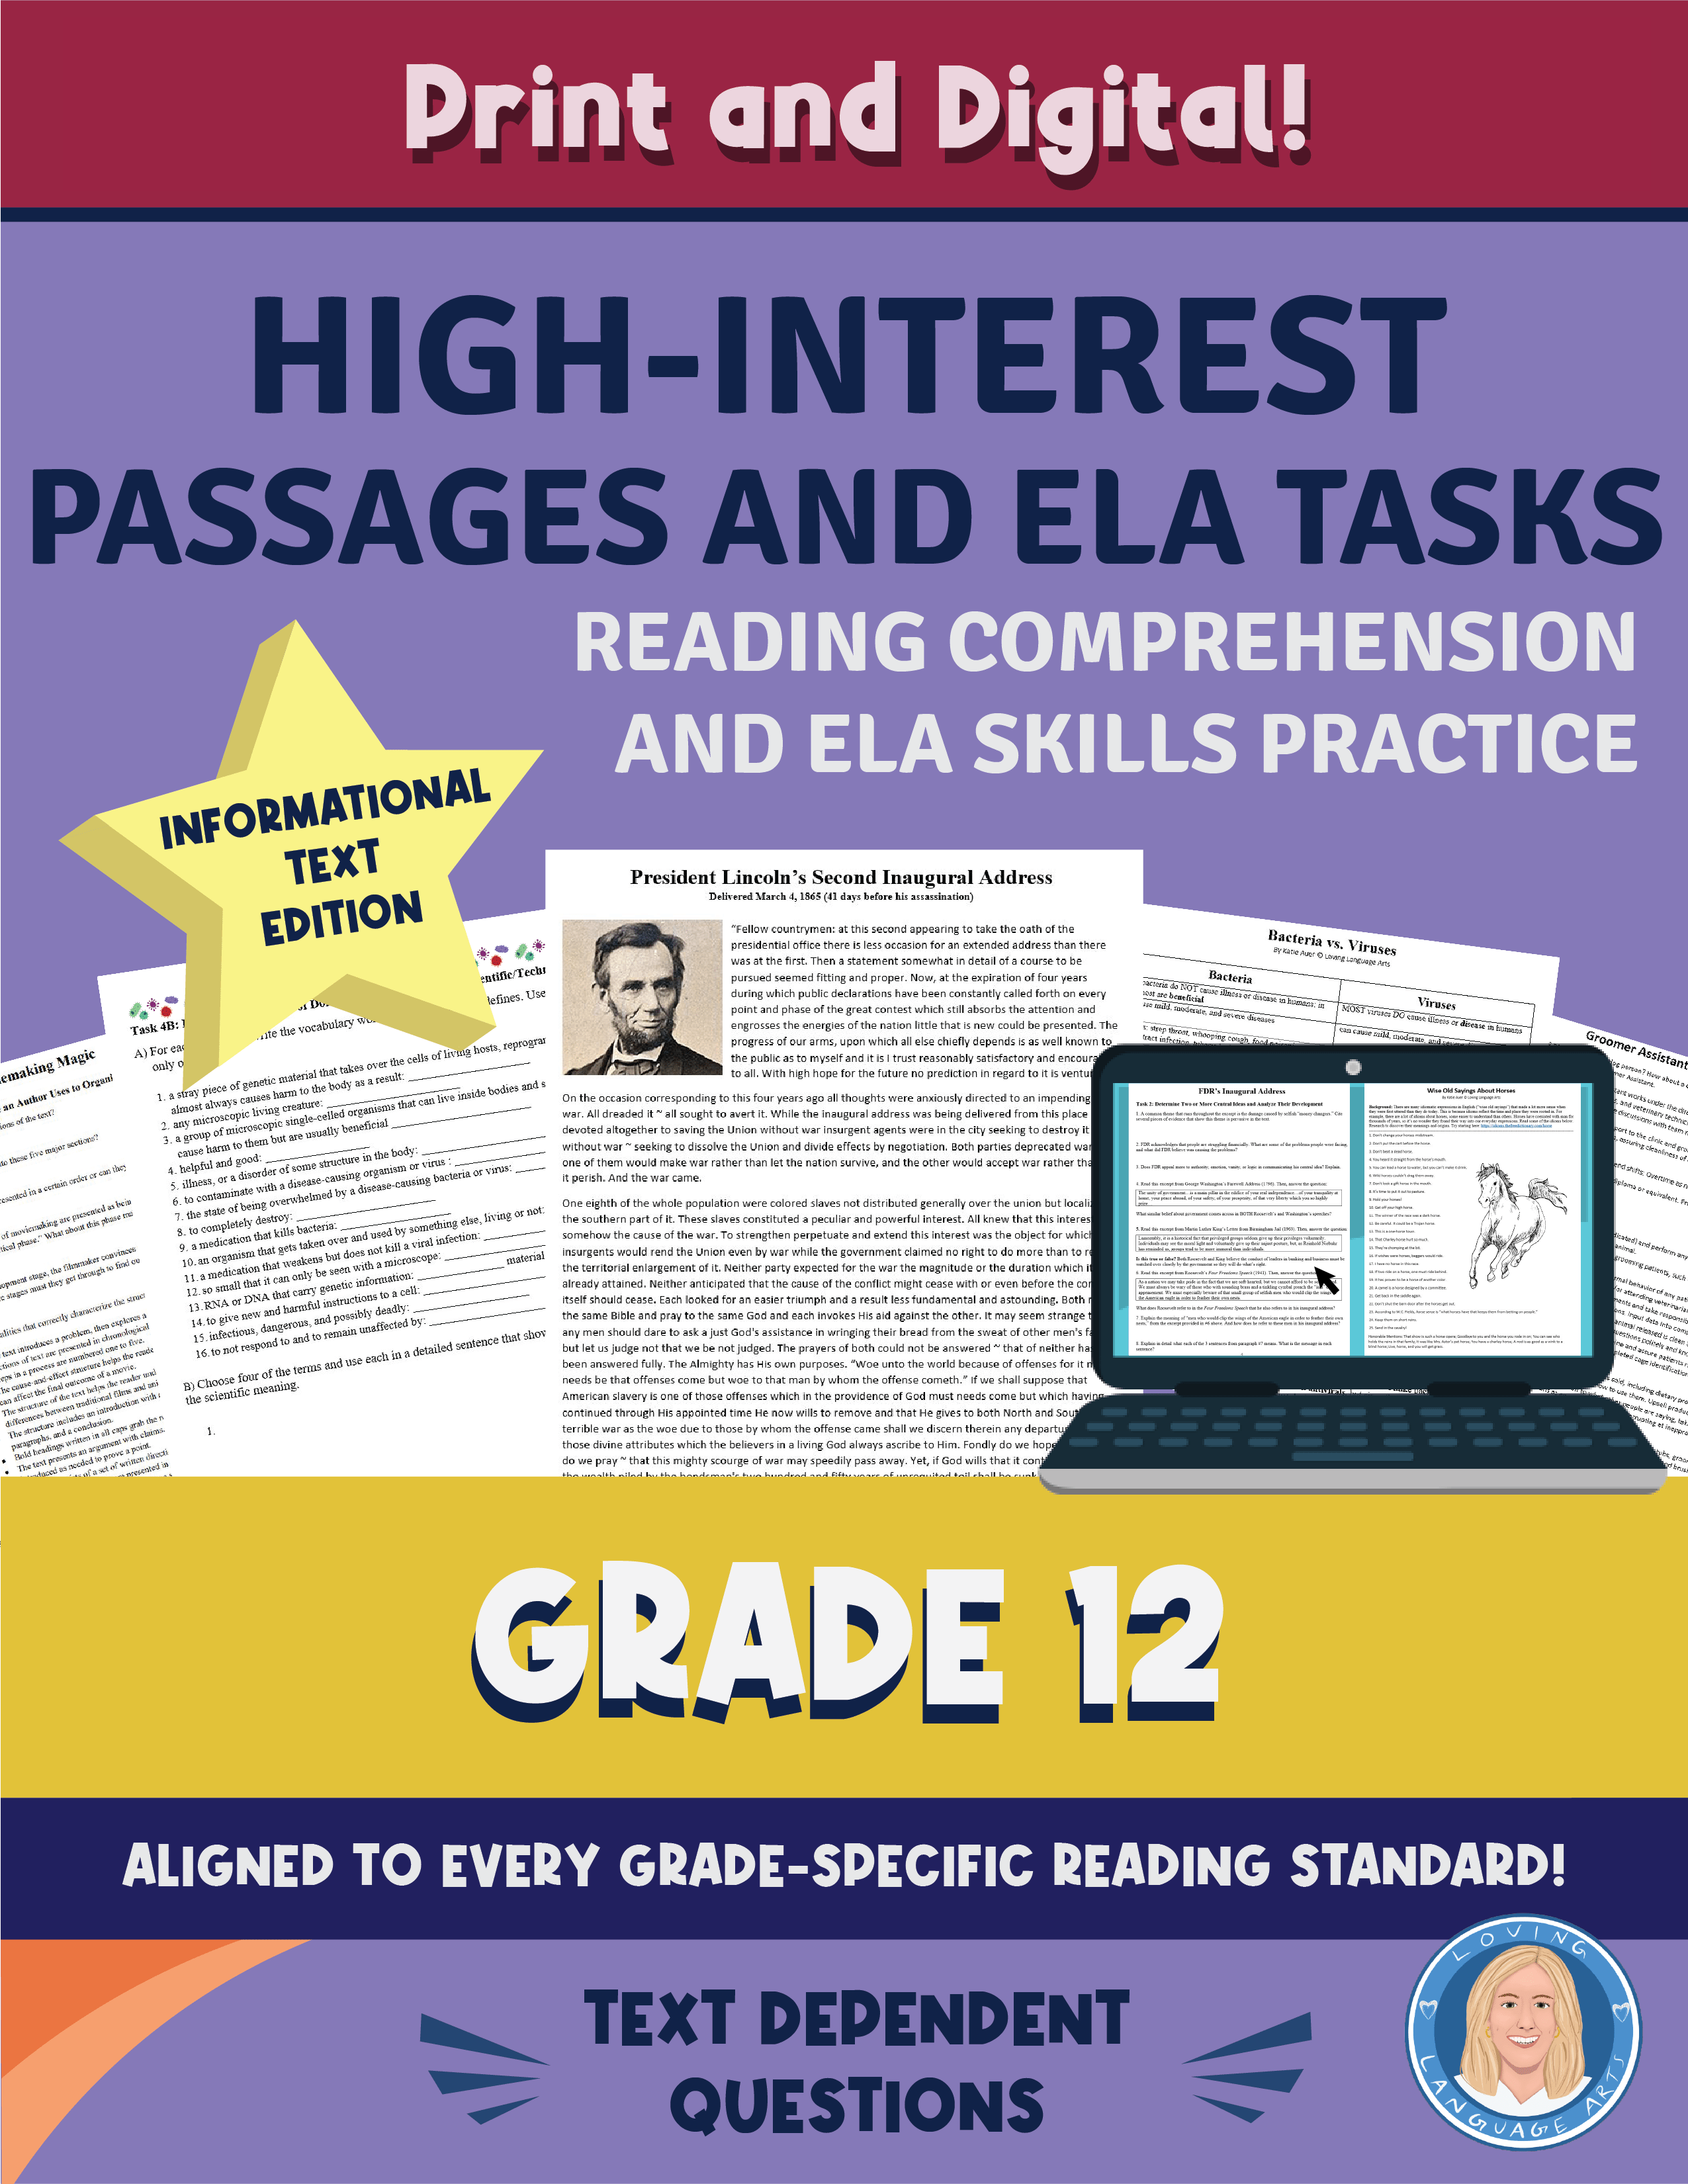 12th grade language arts workbook - High-interest passages and tasks.